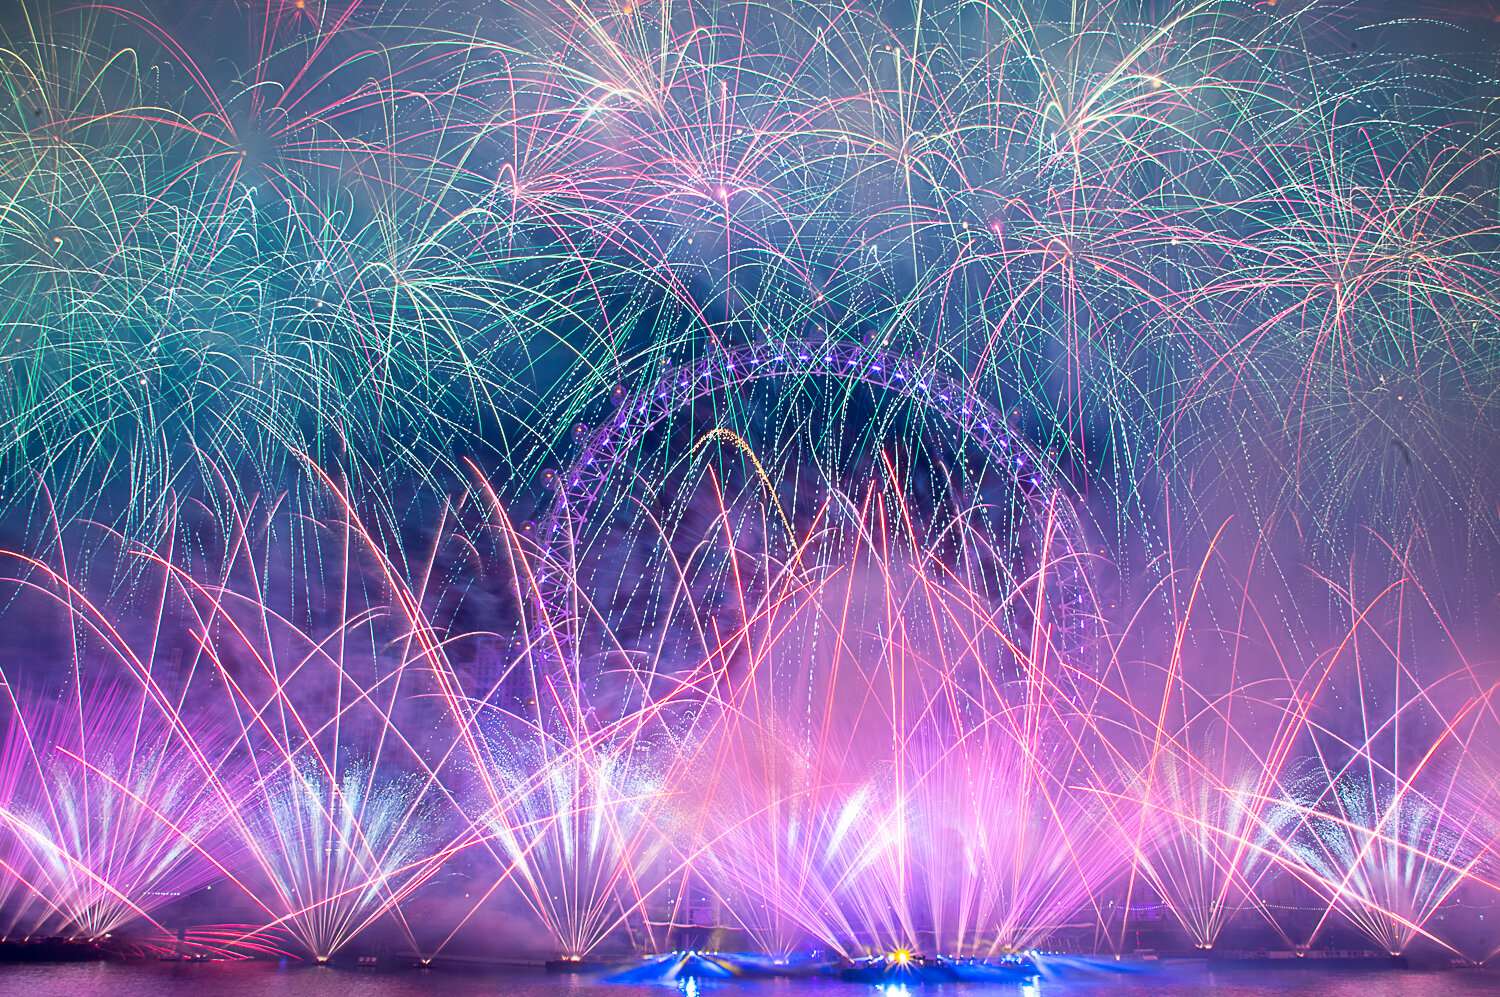 The London Fireworks Display 2020